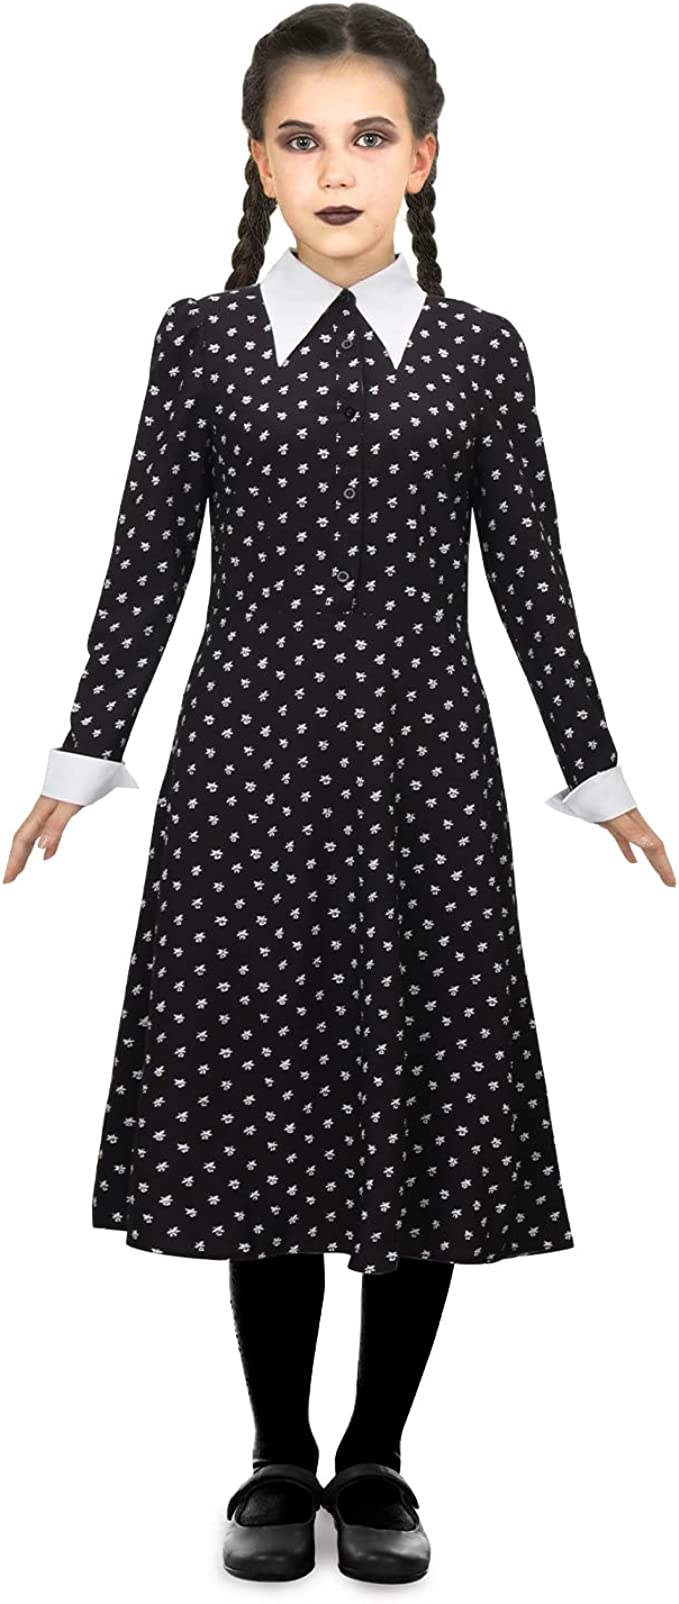 Wednesday Addams Cosplay Girls Dress, Black, S,M,L,XL - Click Image to Close